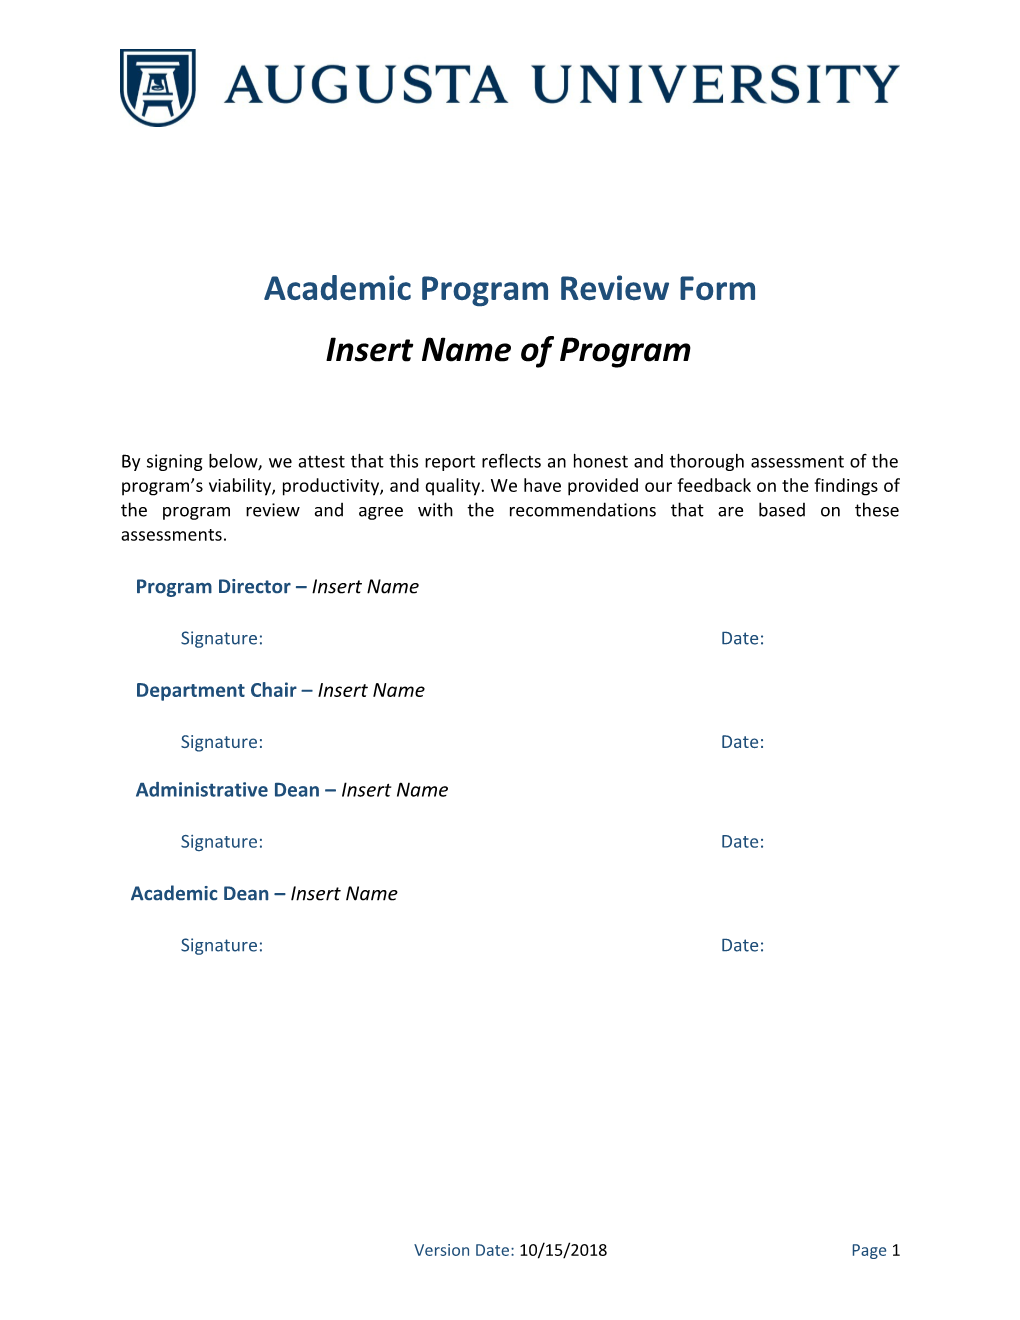 Augusta University Academic Program Review Form